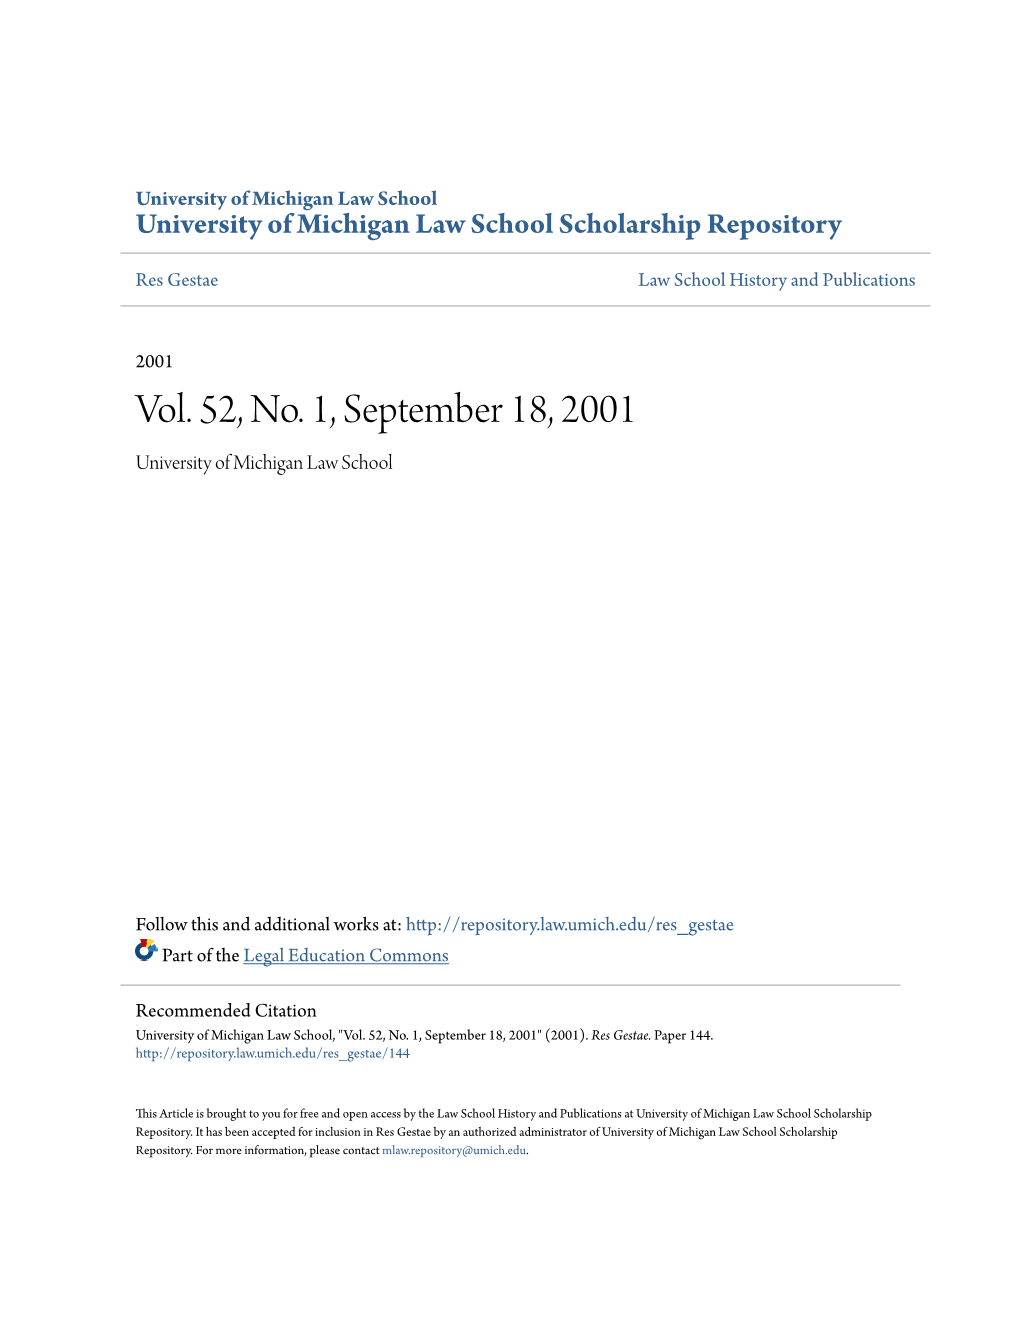 Vol. 52, No. 1, September 18, 2001 University of Michigan Law School